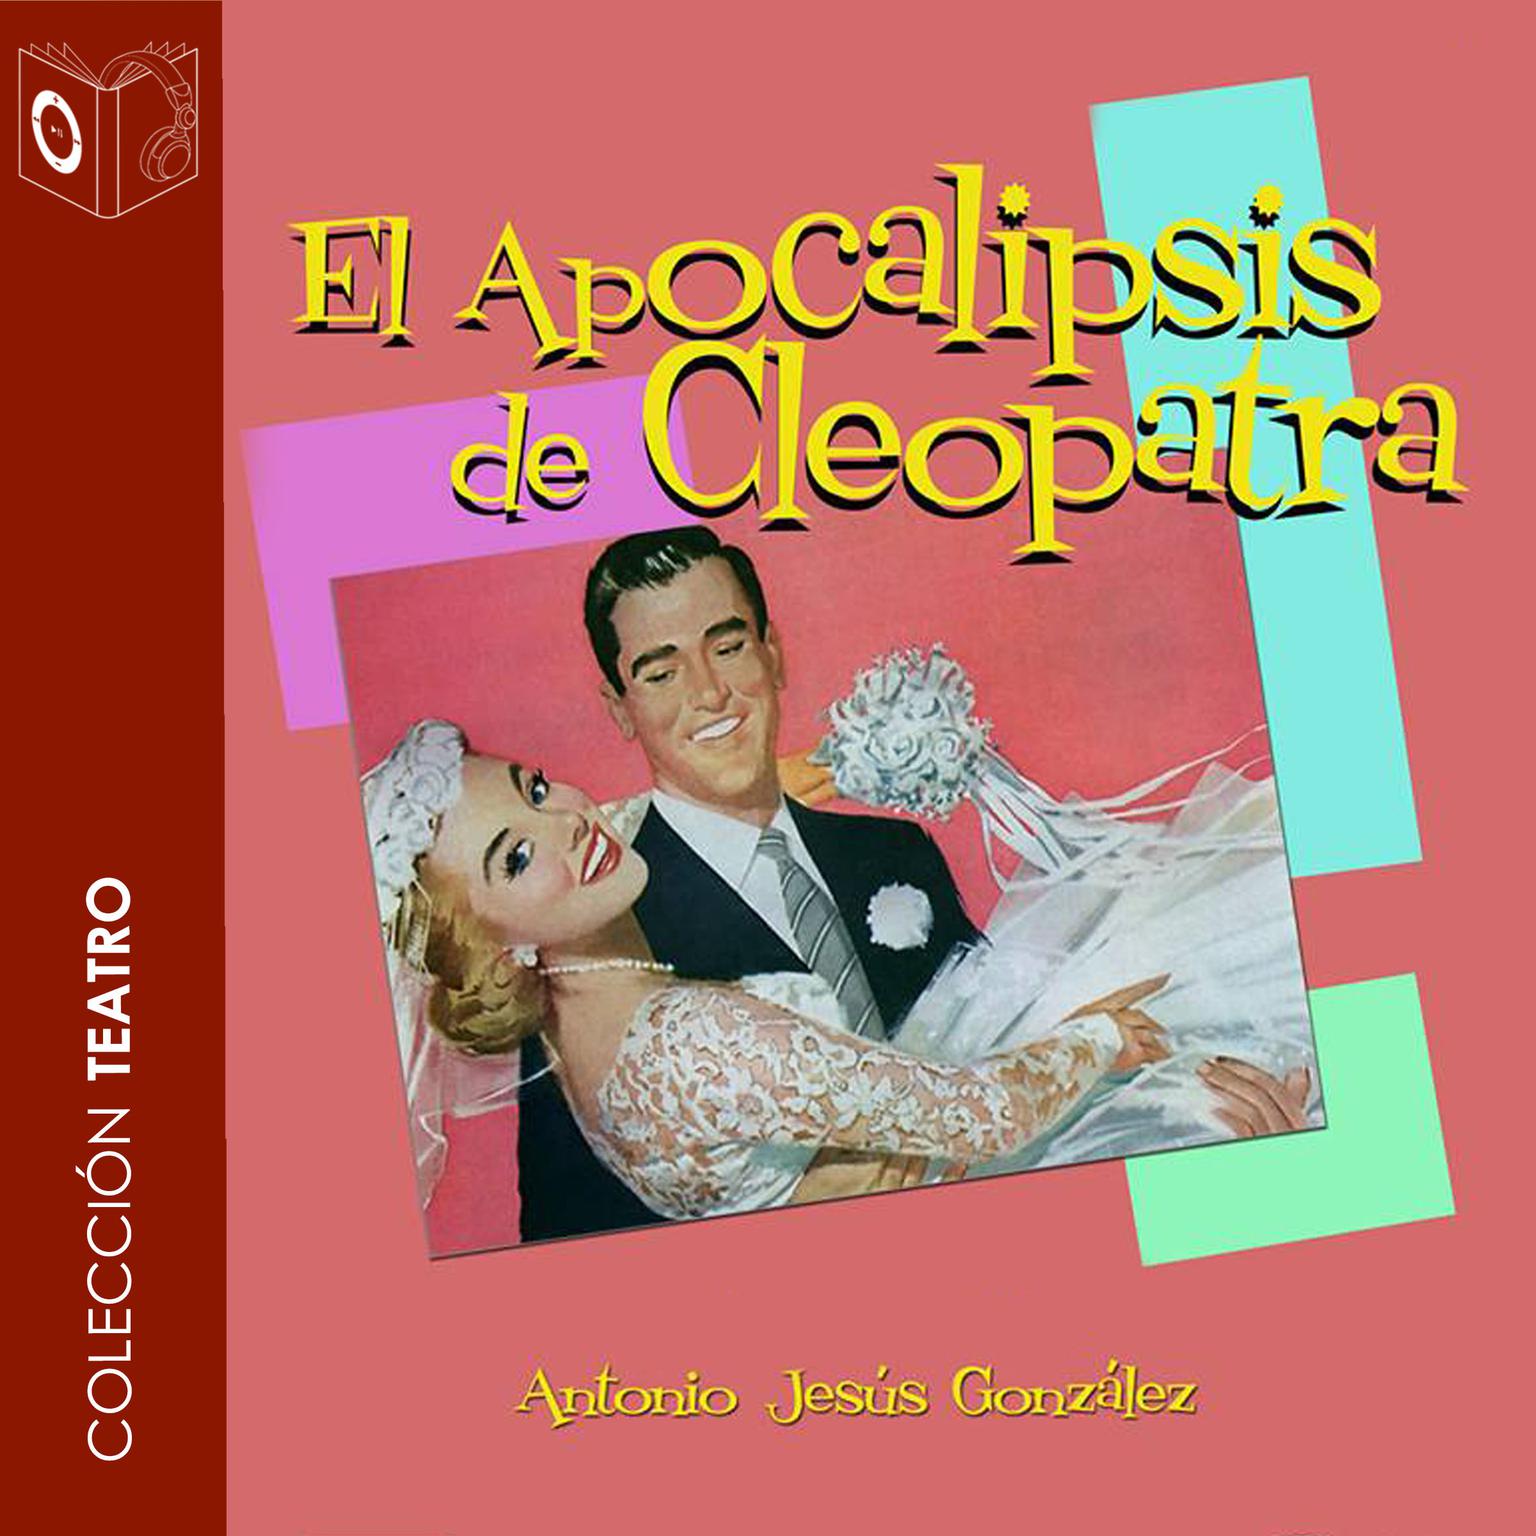 El Apocalipsis de Cleopatra Audiobook, by Antonio Jesús Gonzalez